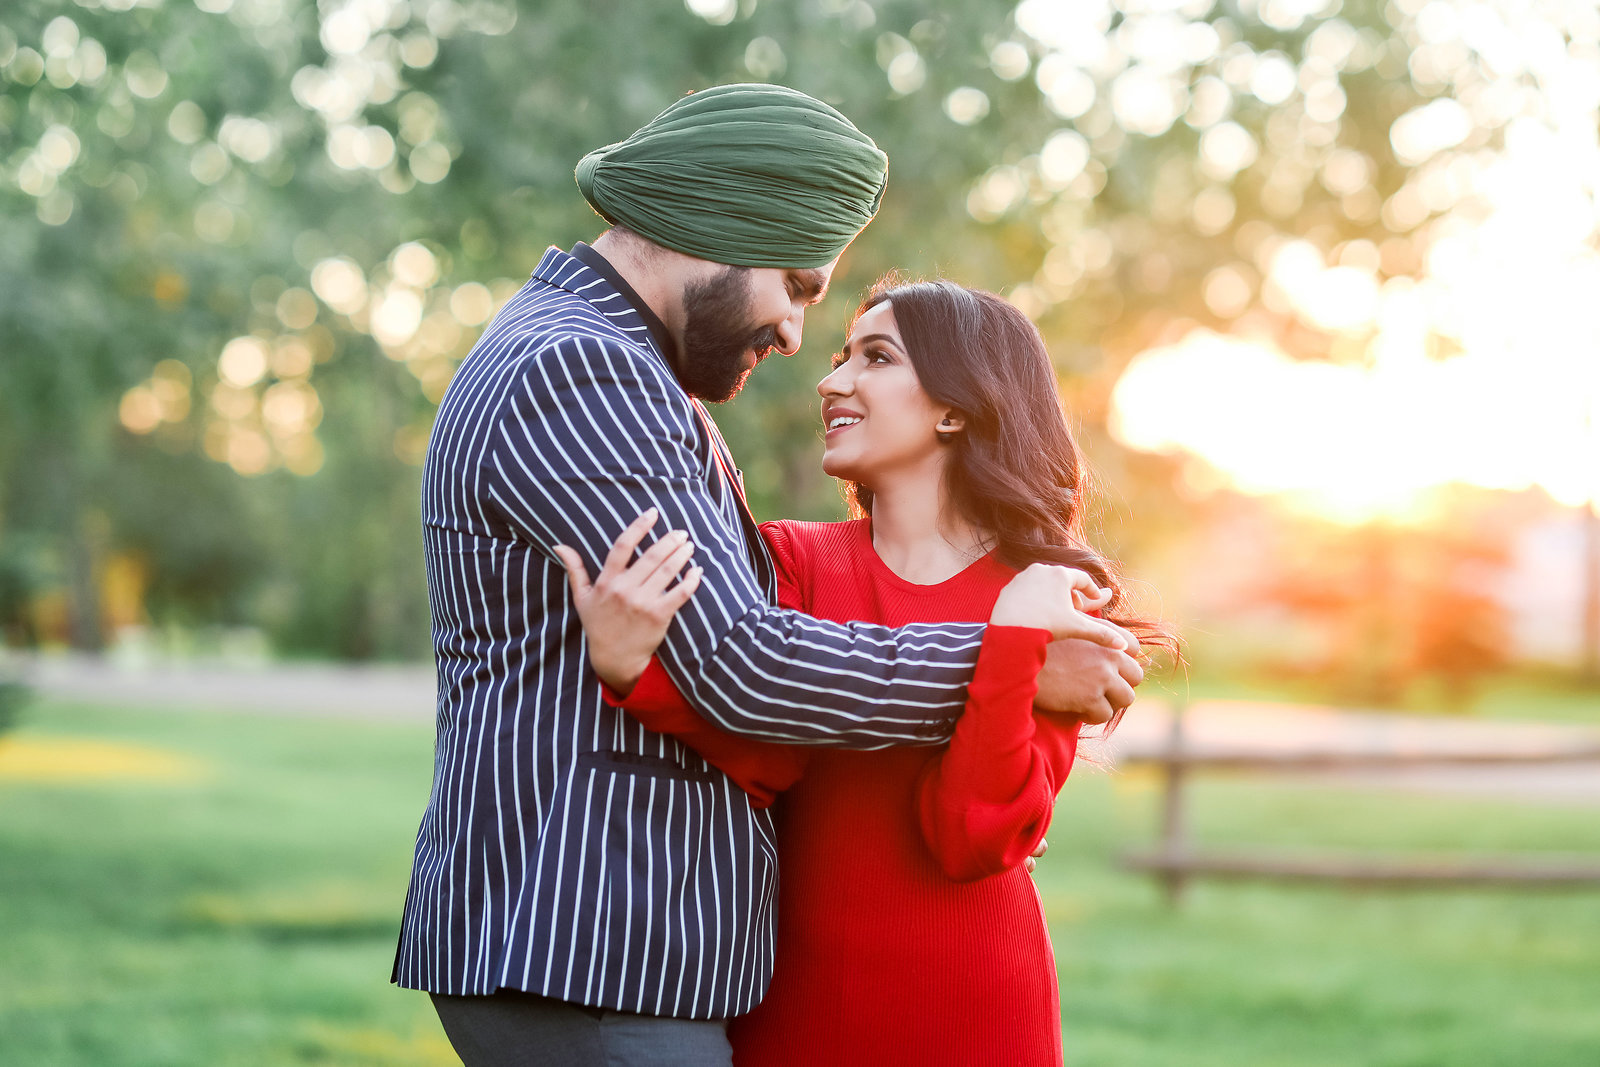 Edmonton Sikh Wedding Photographer, Edmonton Best Wedding Photographer, Edmonton Photographer, Edmonton Hindu Wedding , Calgary Sikh wedding photographer